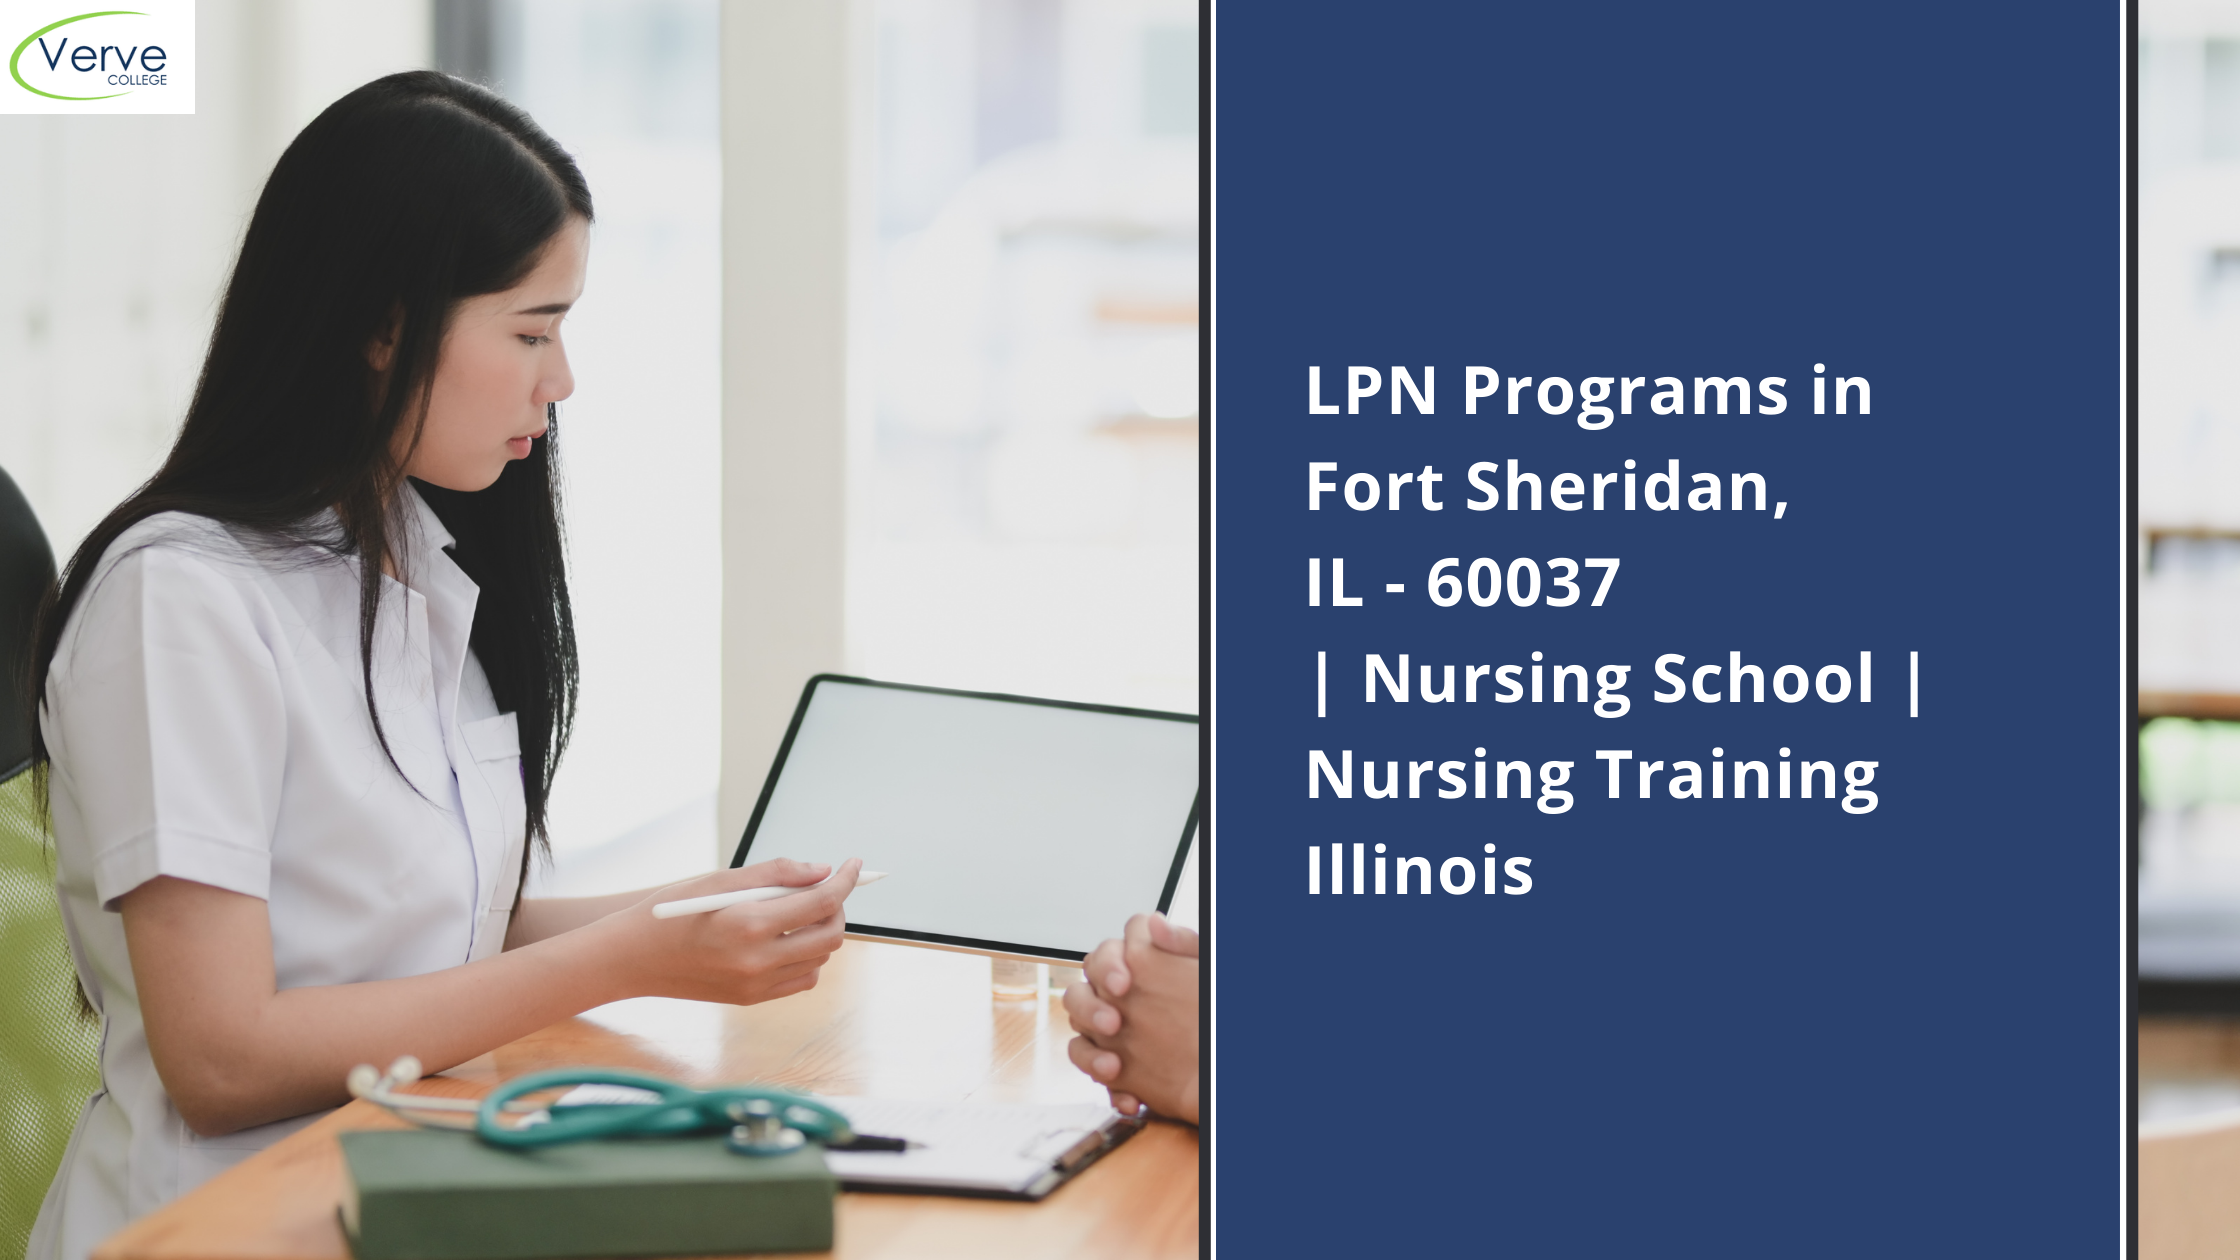 LPN Programs in Fort Sheridan, IL – 60037 | Nursing School | Nursing Training Illinois